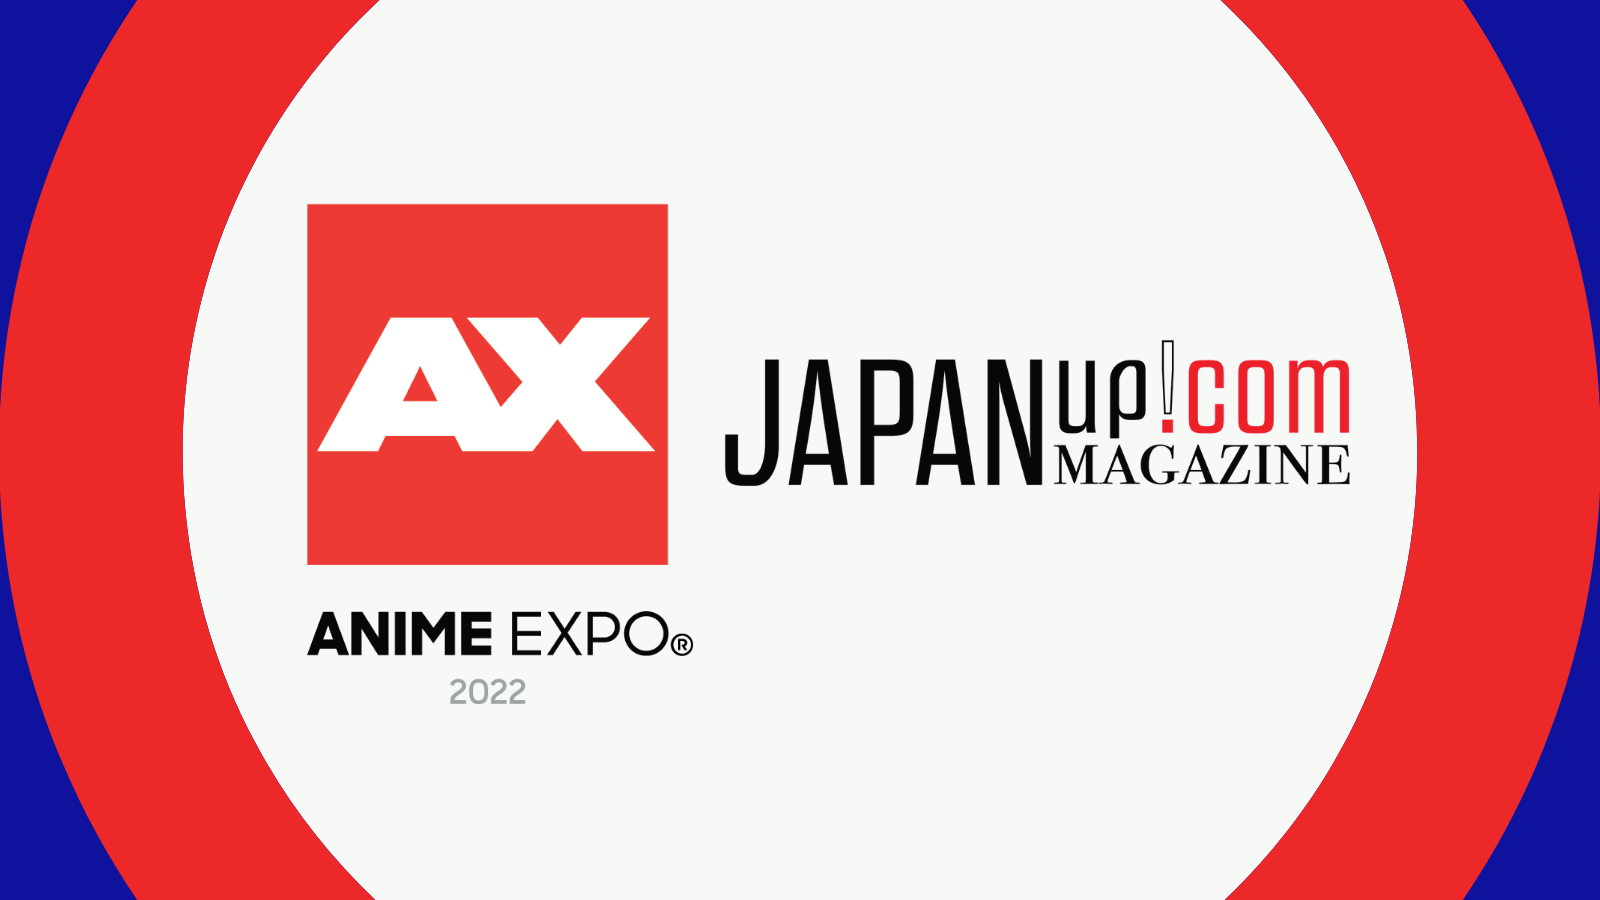 Anime Expo held in Los Angeles, U.S. - Xinhua | English.news.cn